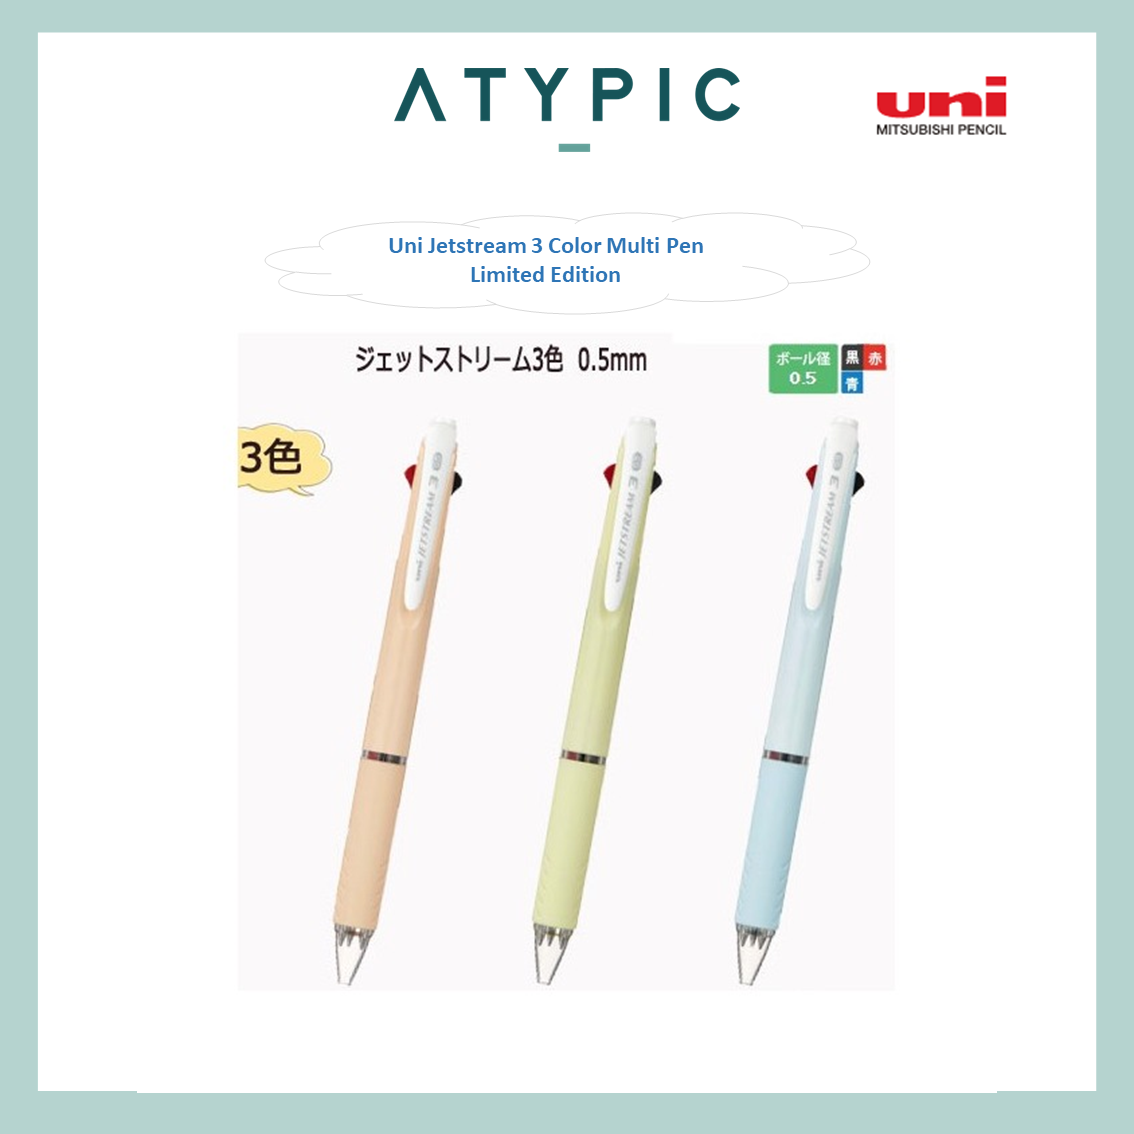 Uni Jetstream Pen Limited Edition - Best Price in Singapore - Jan